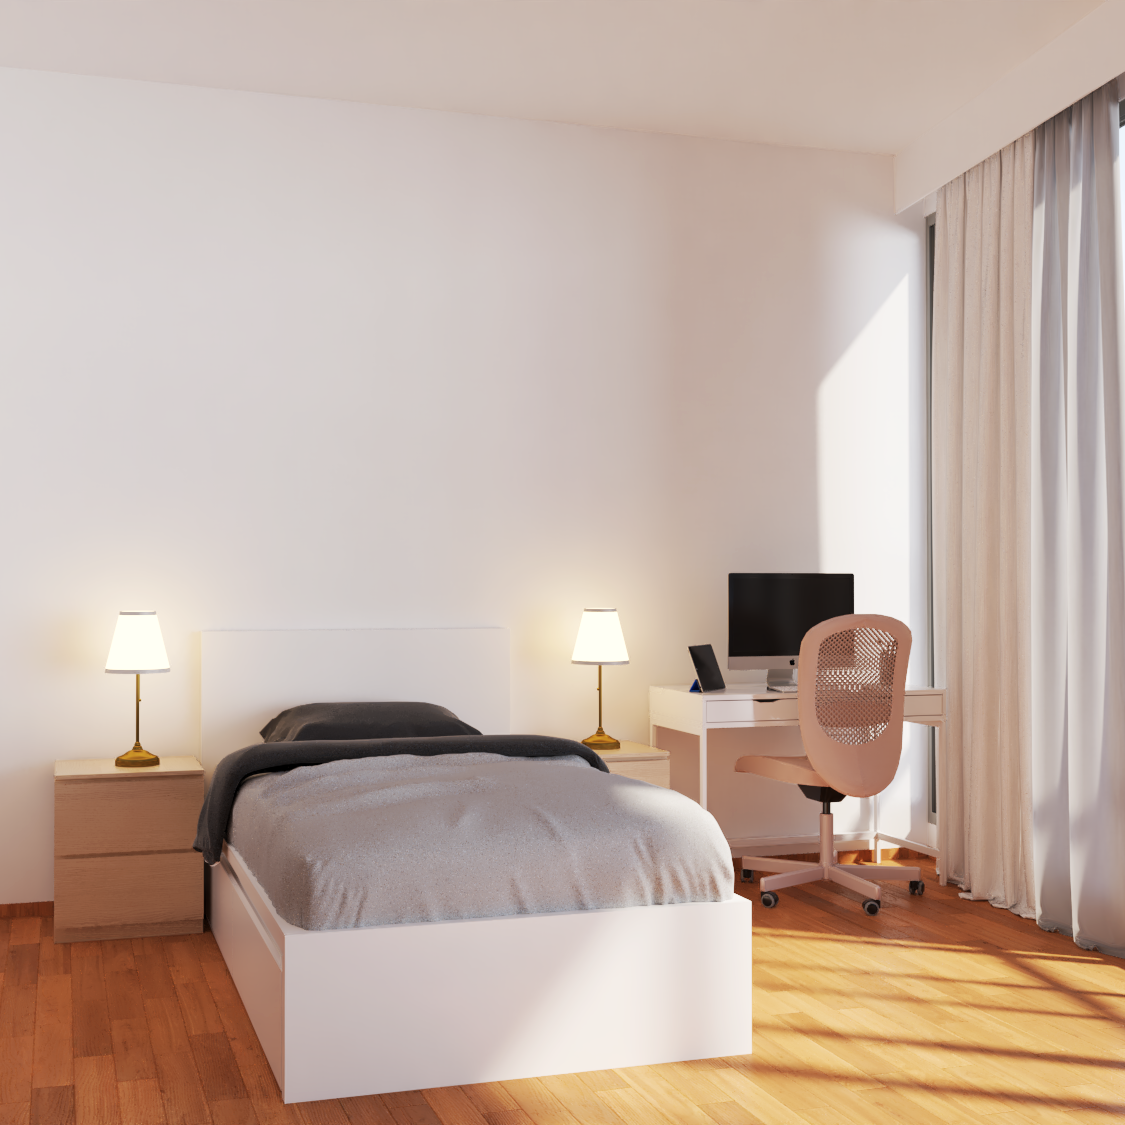 Modern Master Bedroom Design With Single Storage Bed